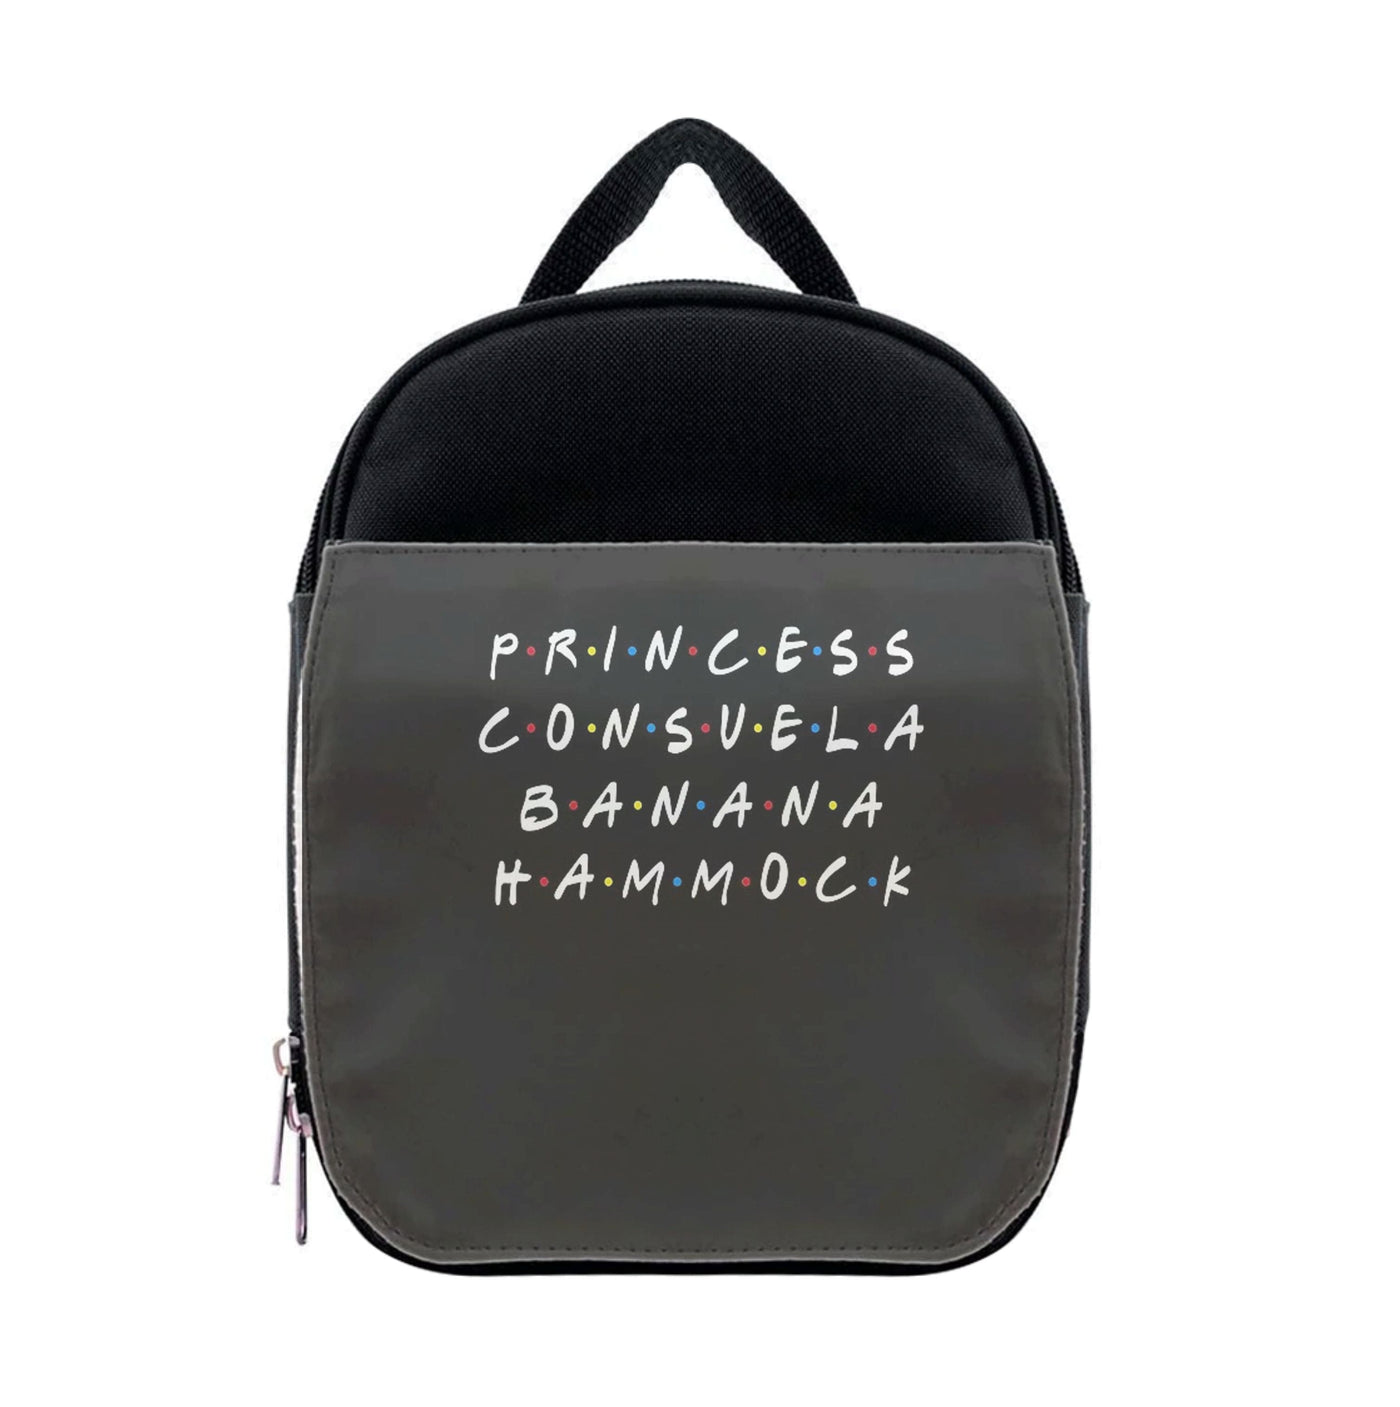 Princess Consuela Banana Hammock - Friends Lunchbox